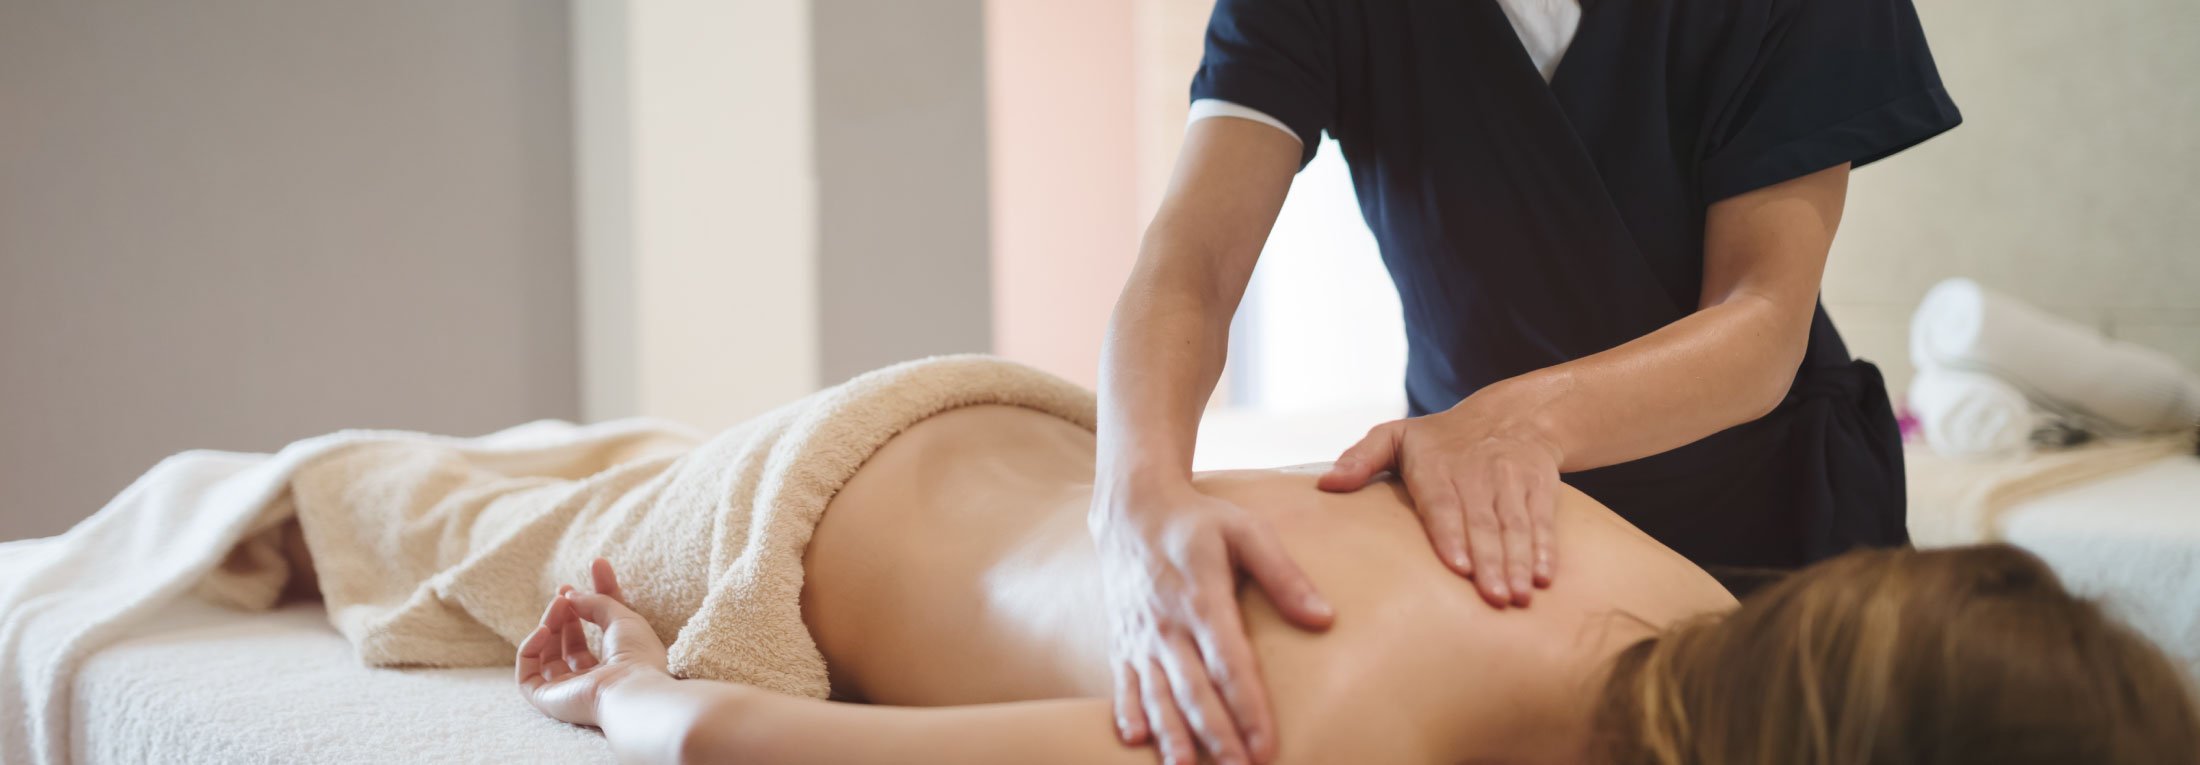 Woman getting a deep tissue back massage